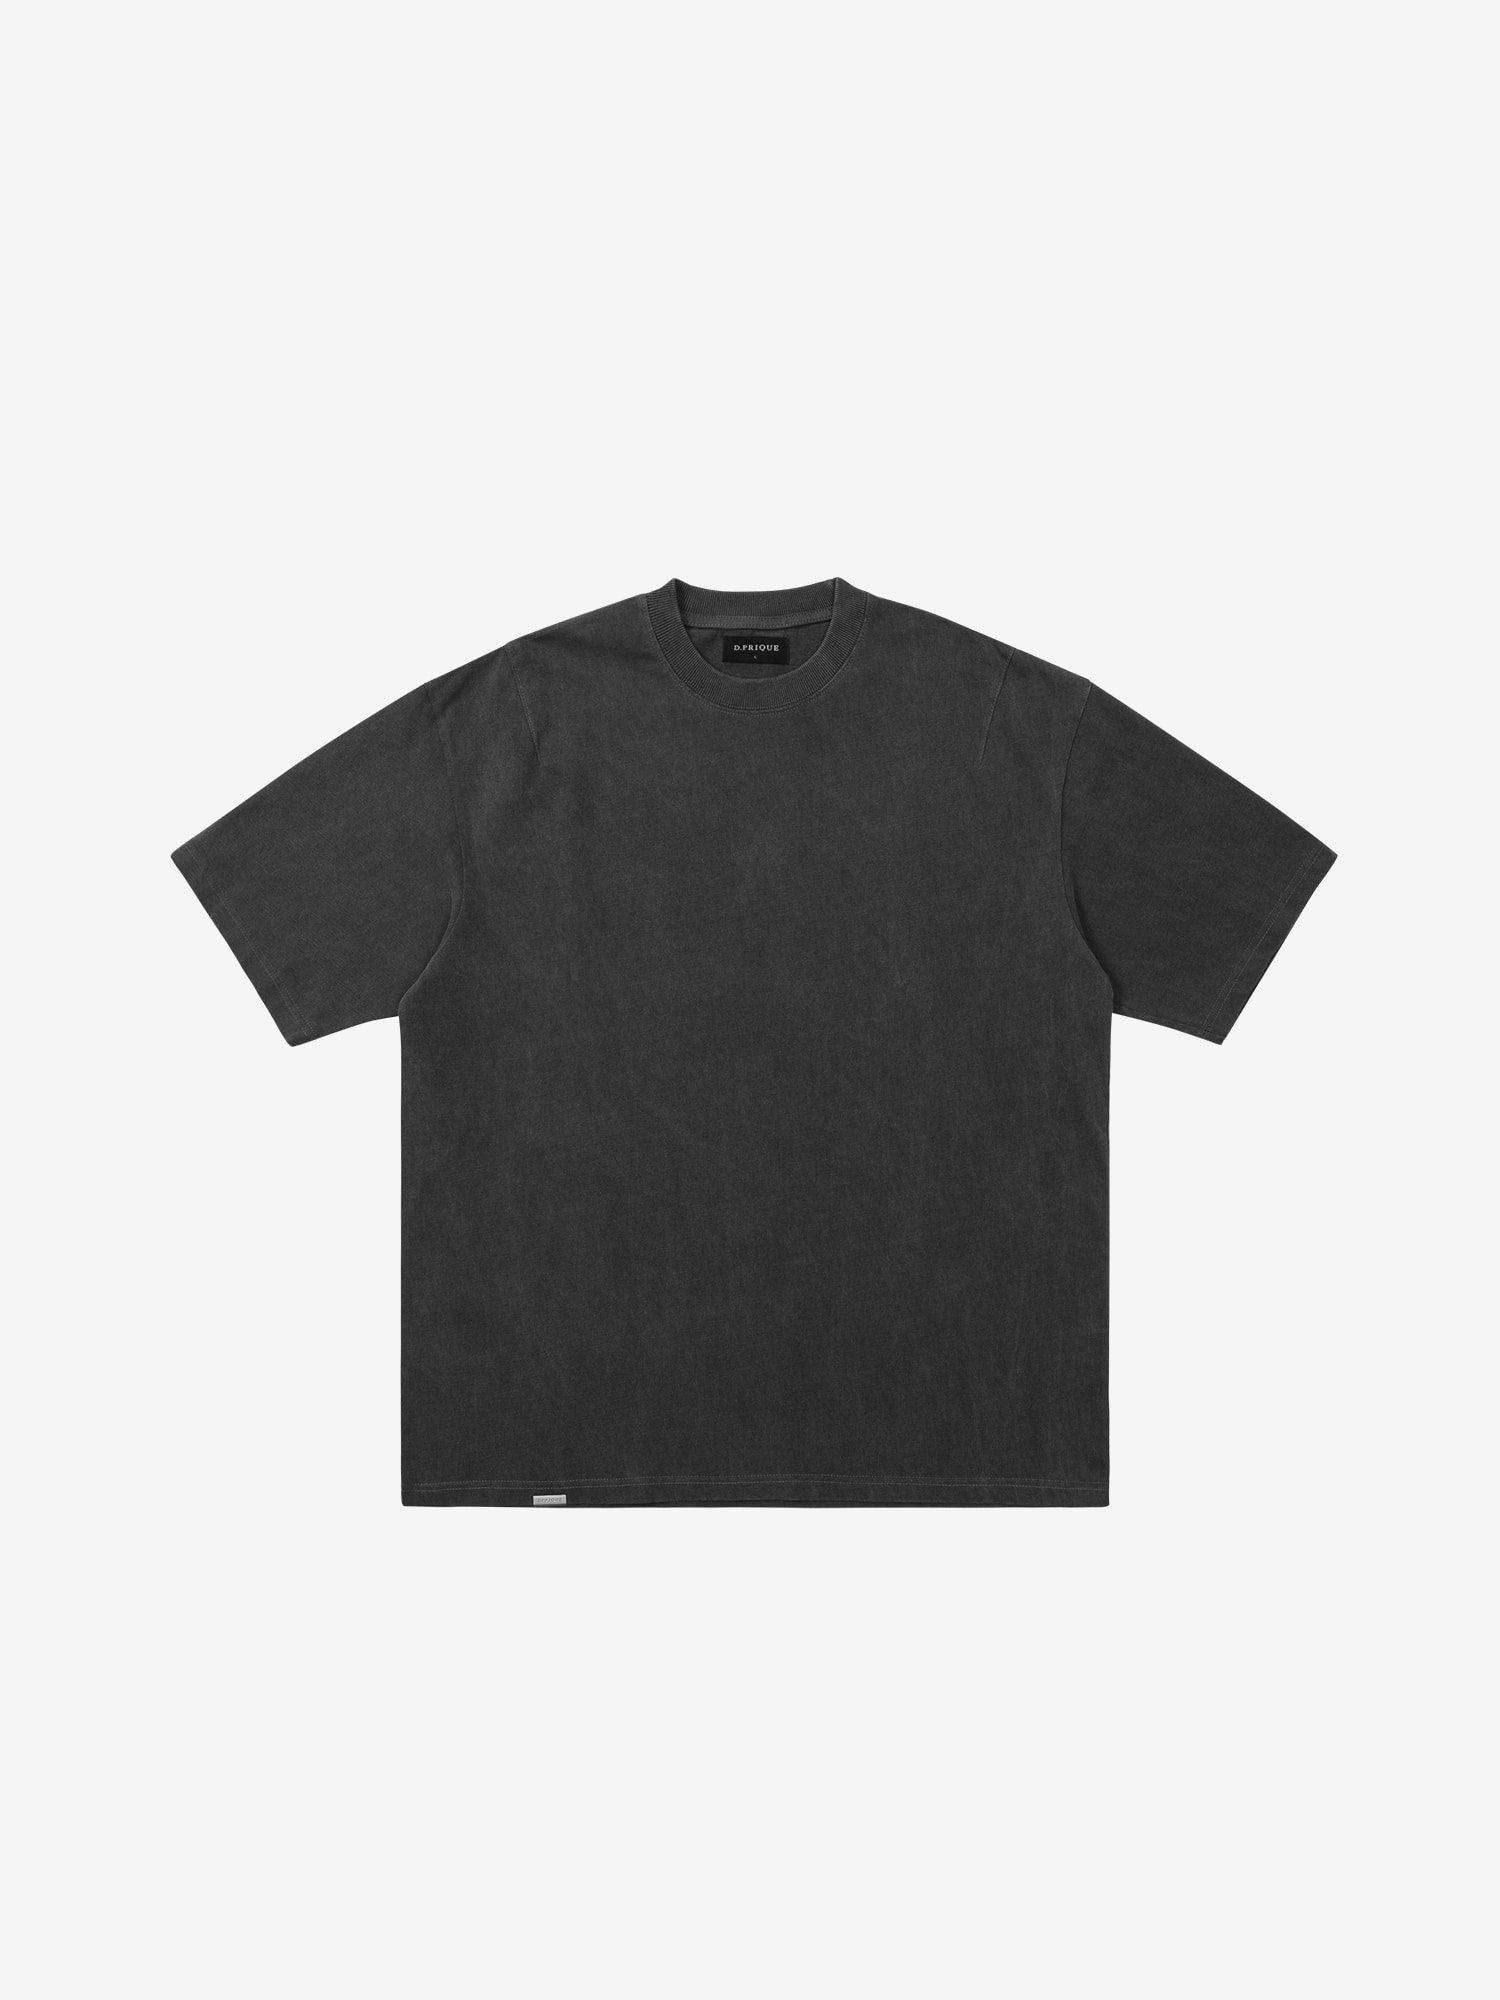 Classic Cotton T-Shirt - Washed Black